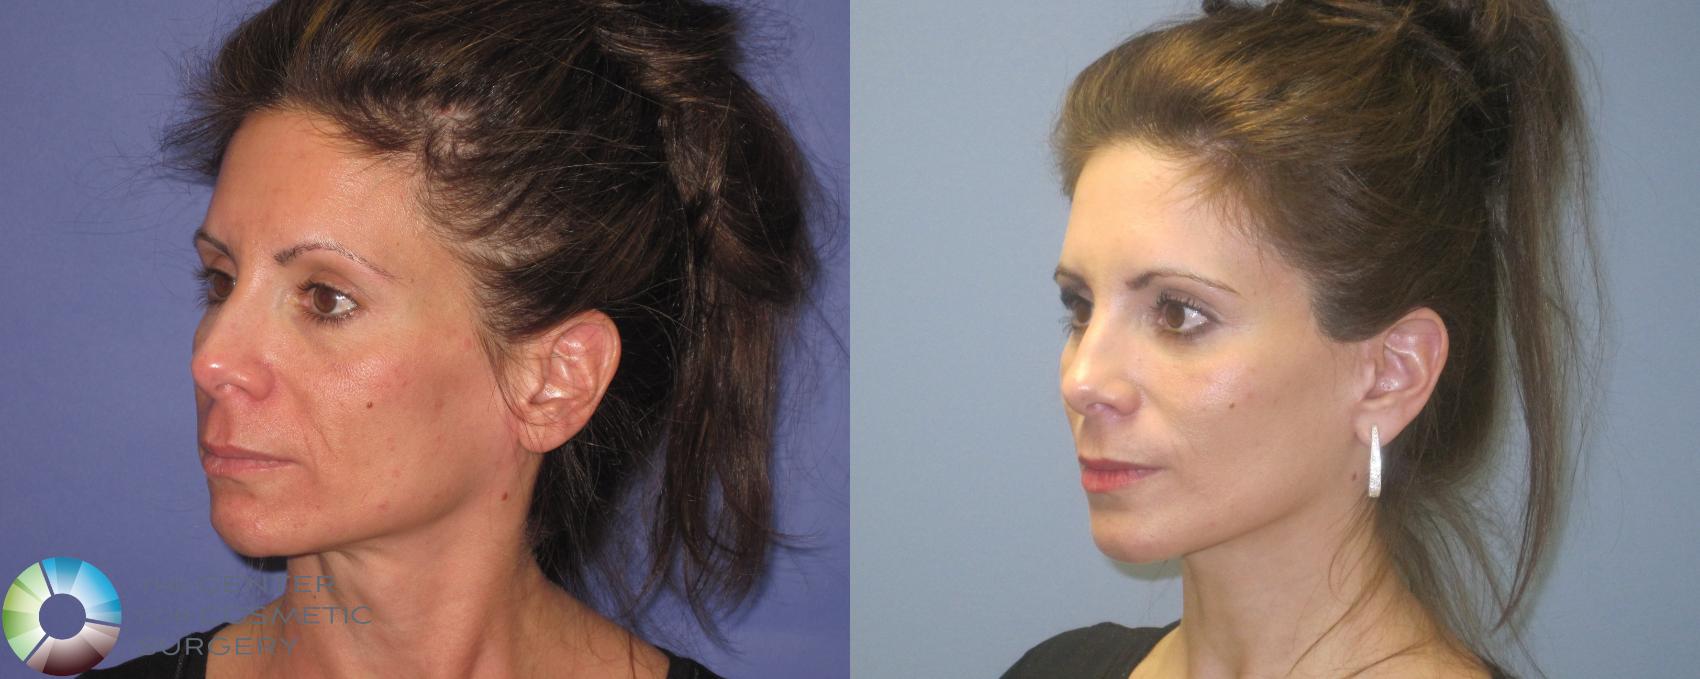 Before & After Laser Skin Resurfacing Case 462 View #2 View in Denver & Golden, CO